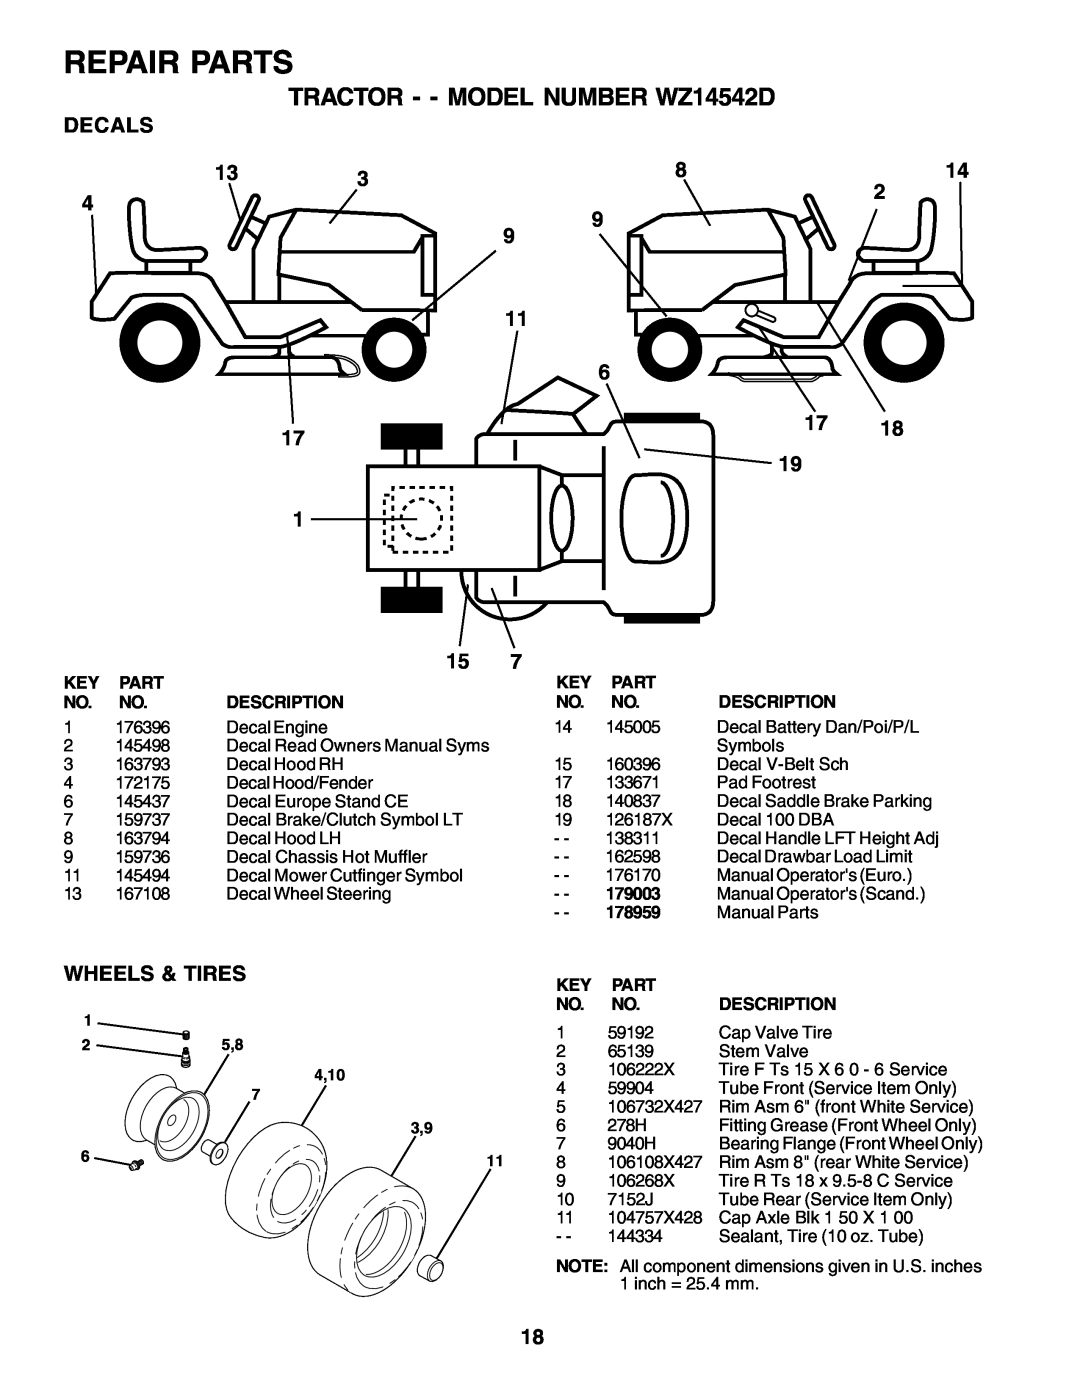 Wizard Ca Co manual Repair Parts, TRACTOR - - MODEL NUMBER WZ14542D, Decals, Wheels & Tires, 4,10 